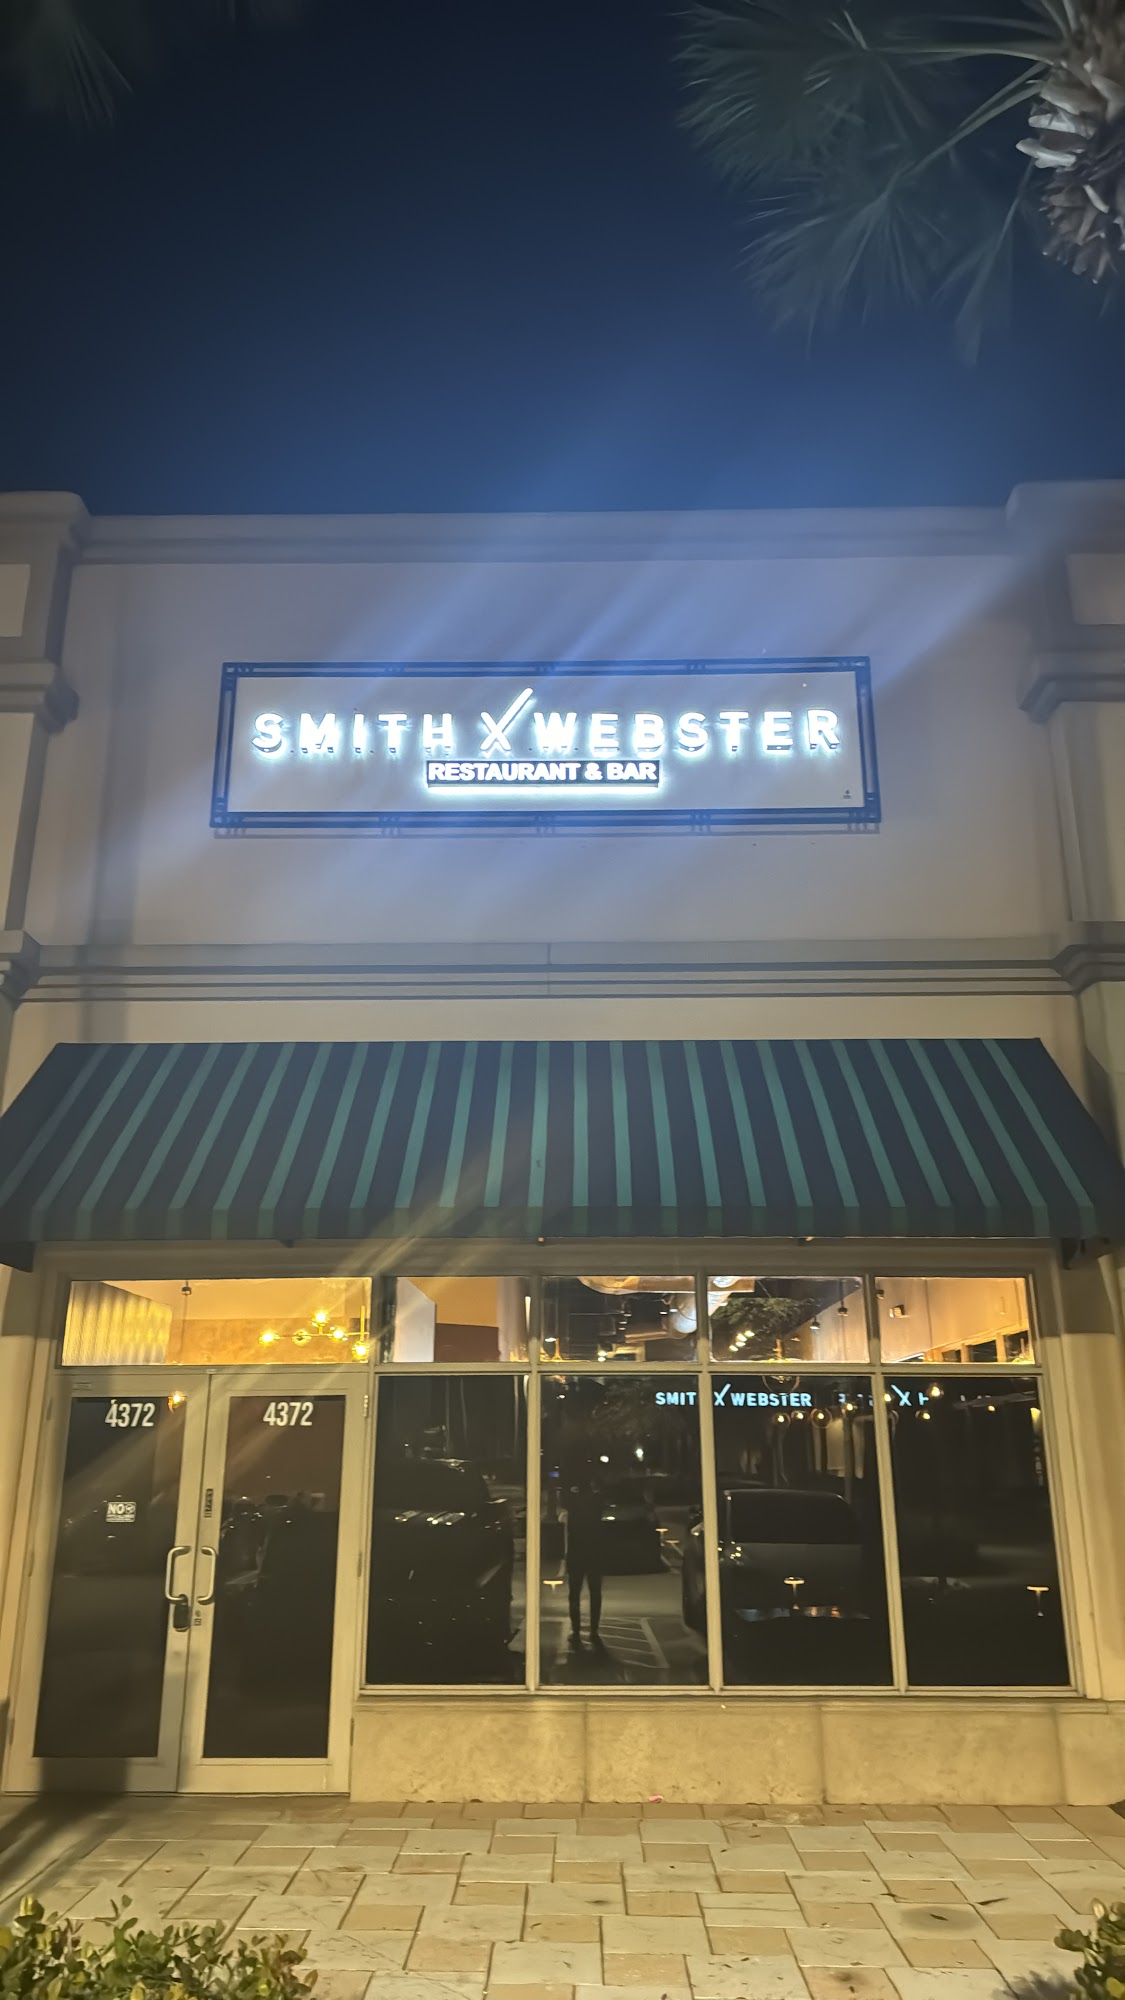 Smith & Webster Restaurant Coral Springs